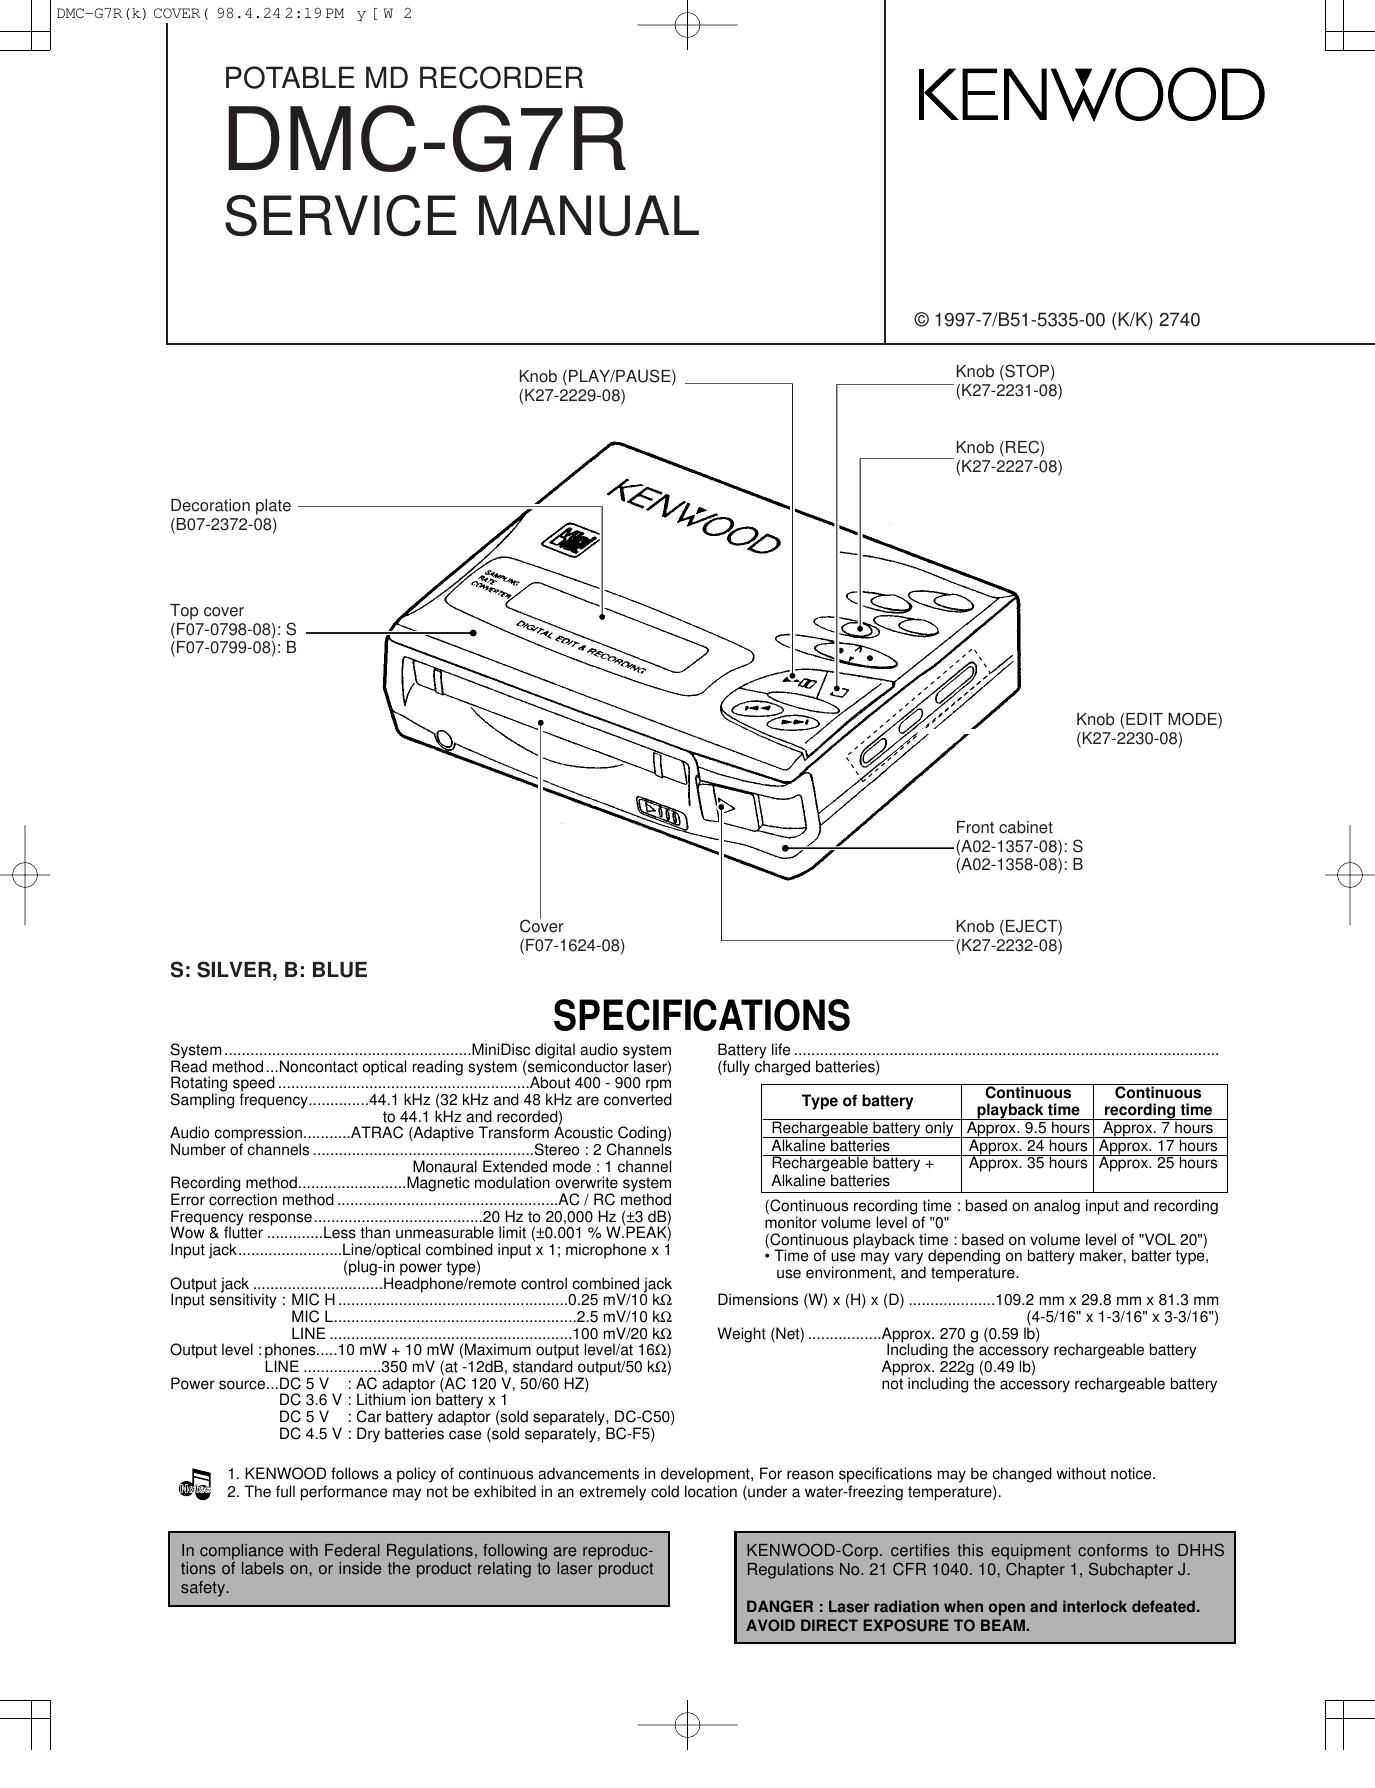 Kenwood DMCG 7 R Service Manual